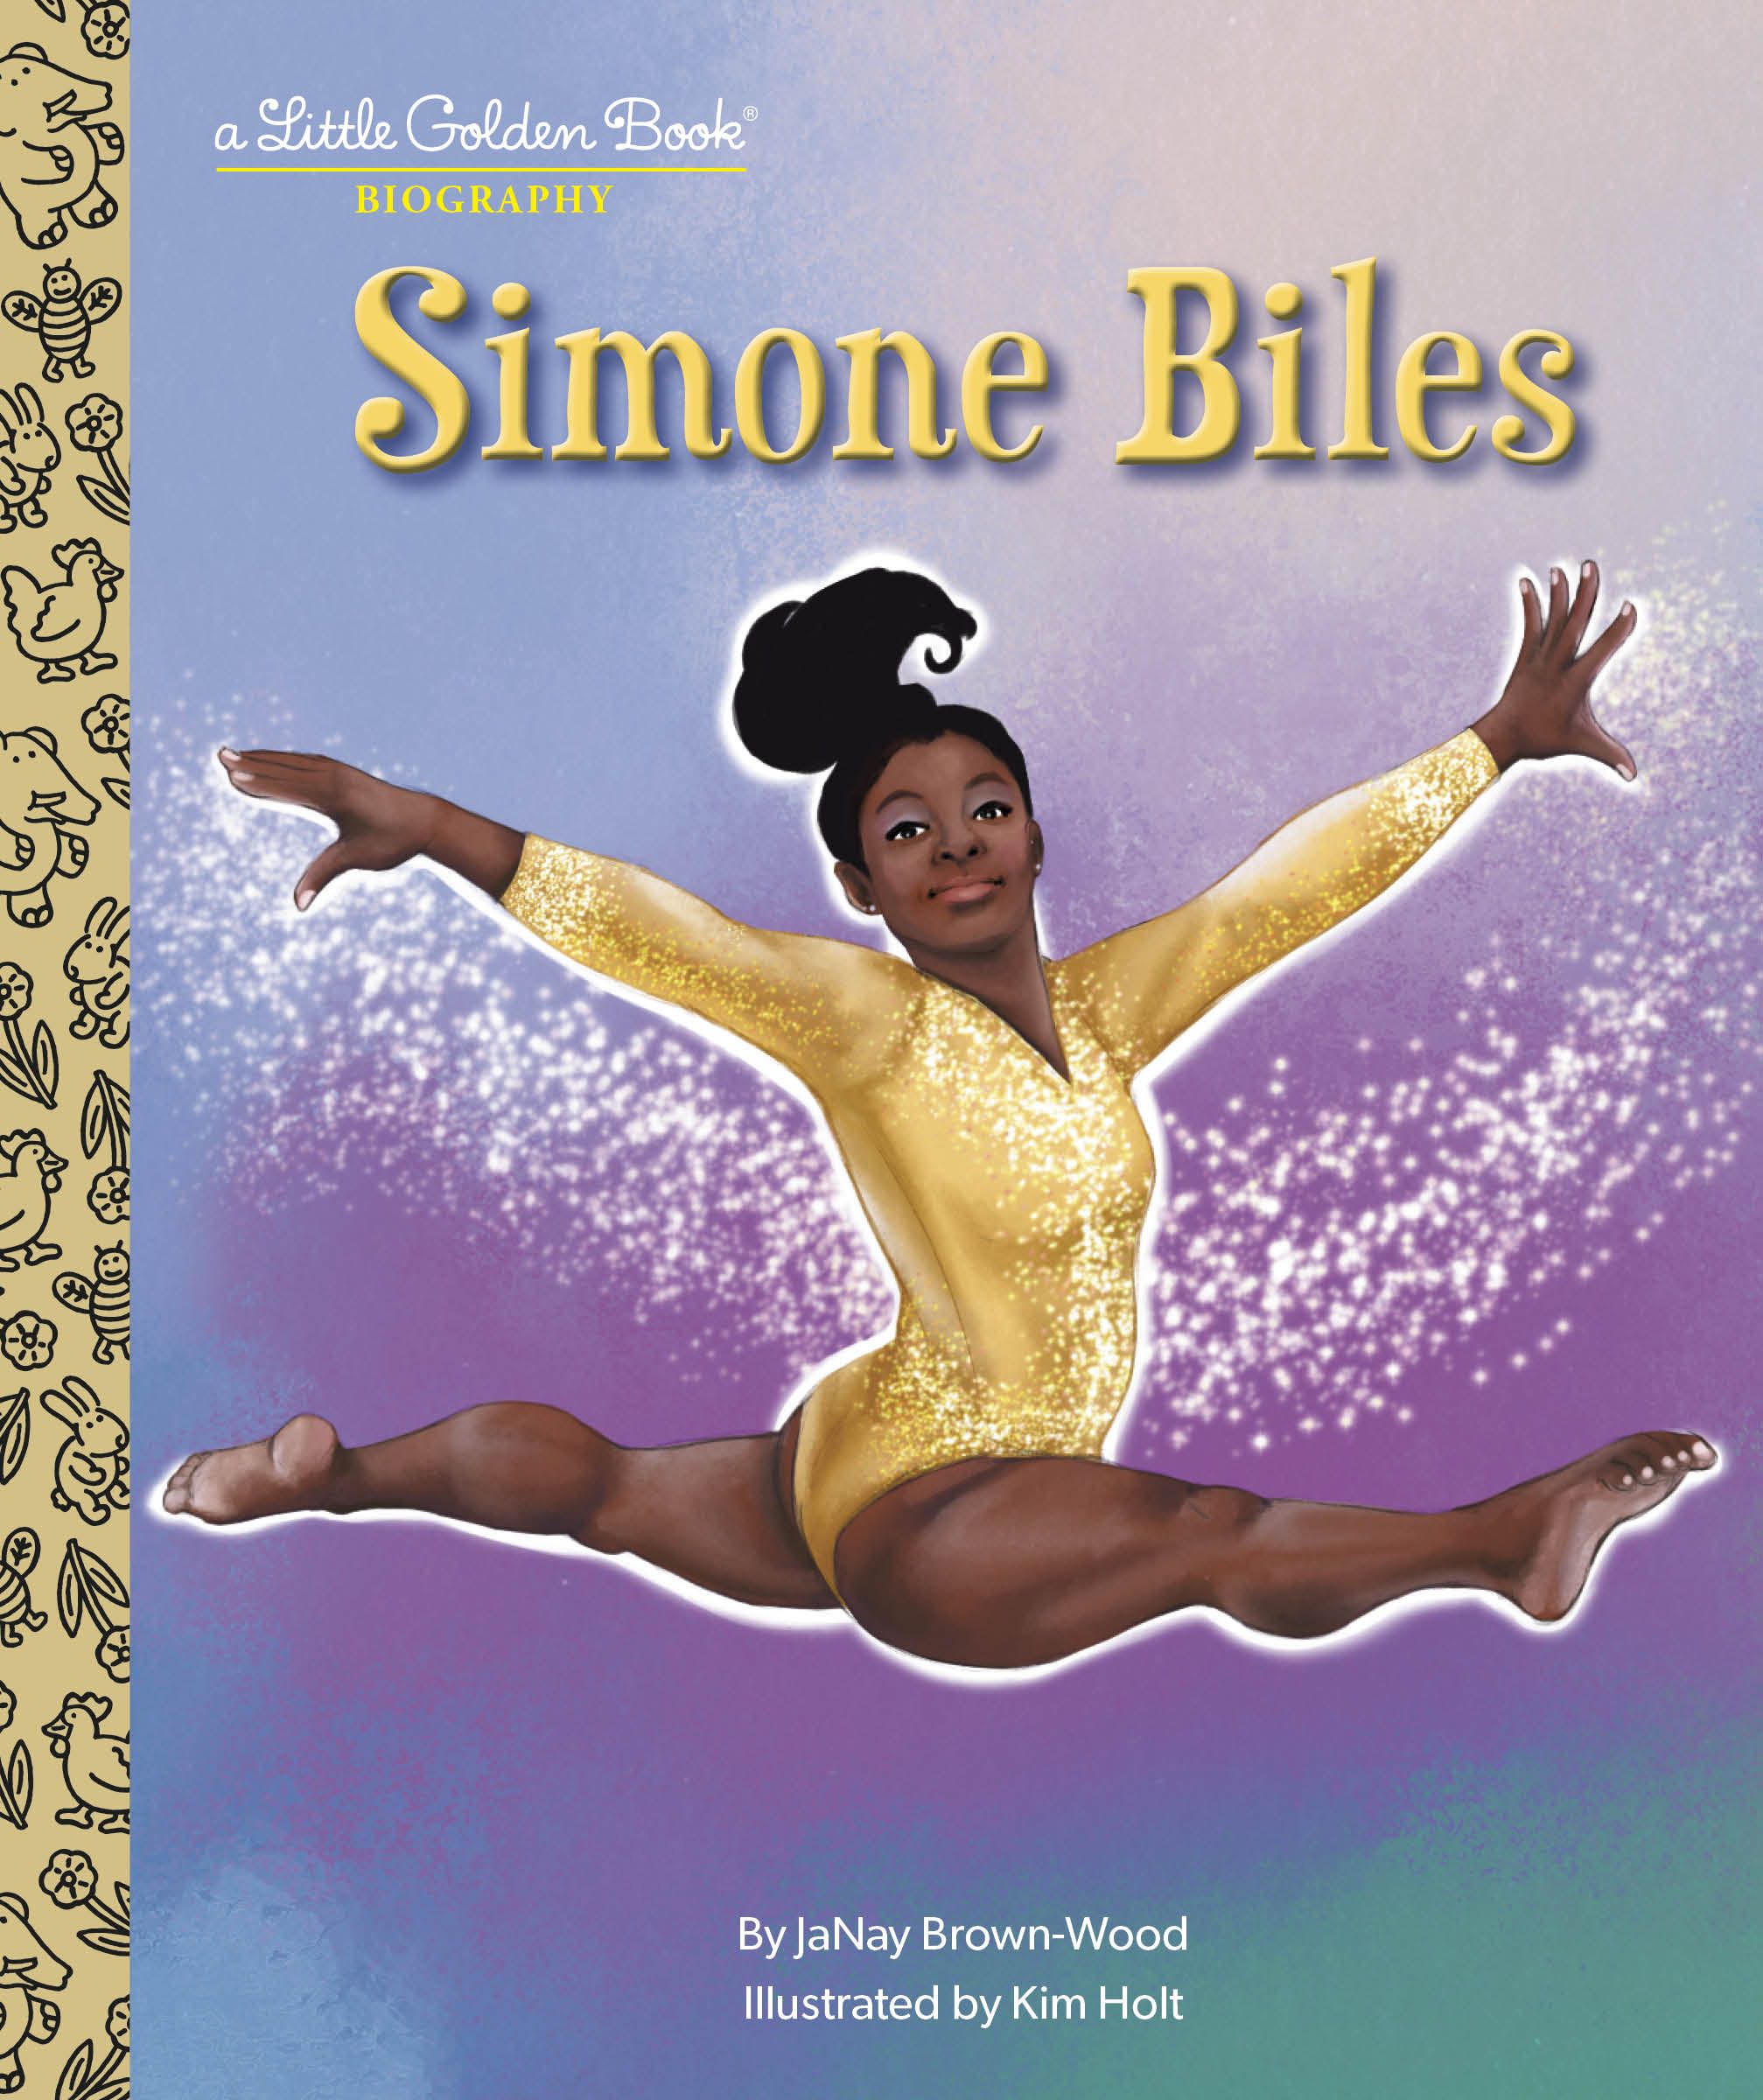 Simone Biles A Little Golden Book Biography